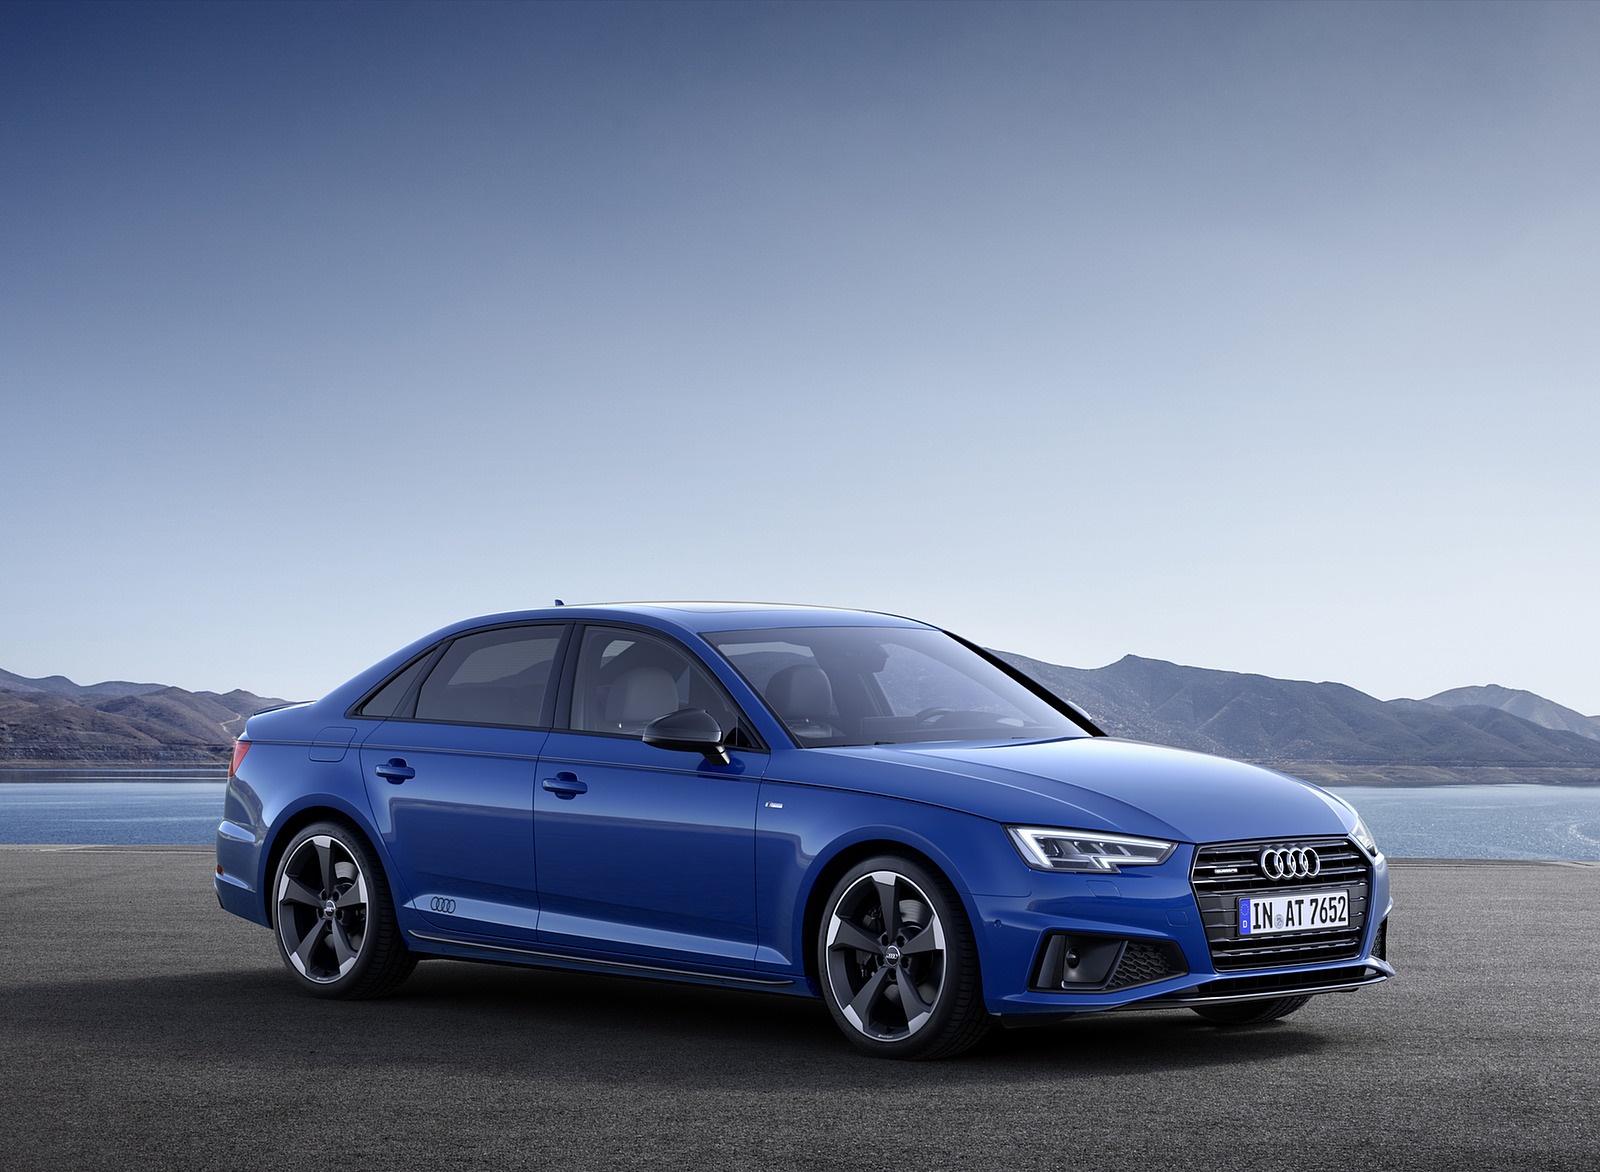 2019 Audi A4 (Color: Ascari Blue) Front Three-Quarter Wallpapers #23 of 35